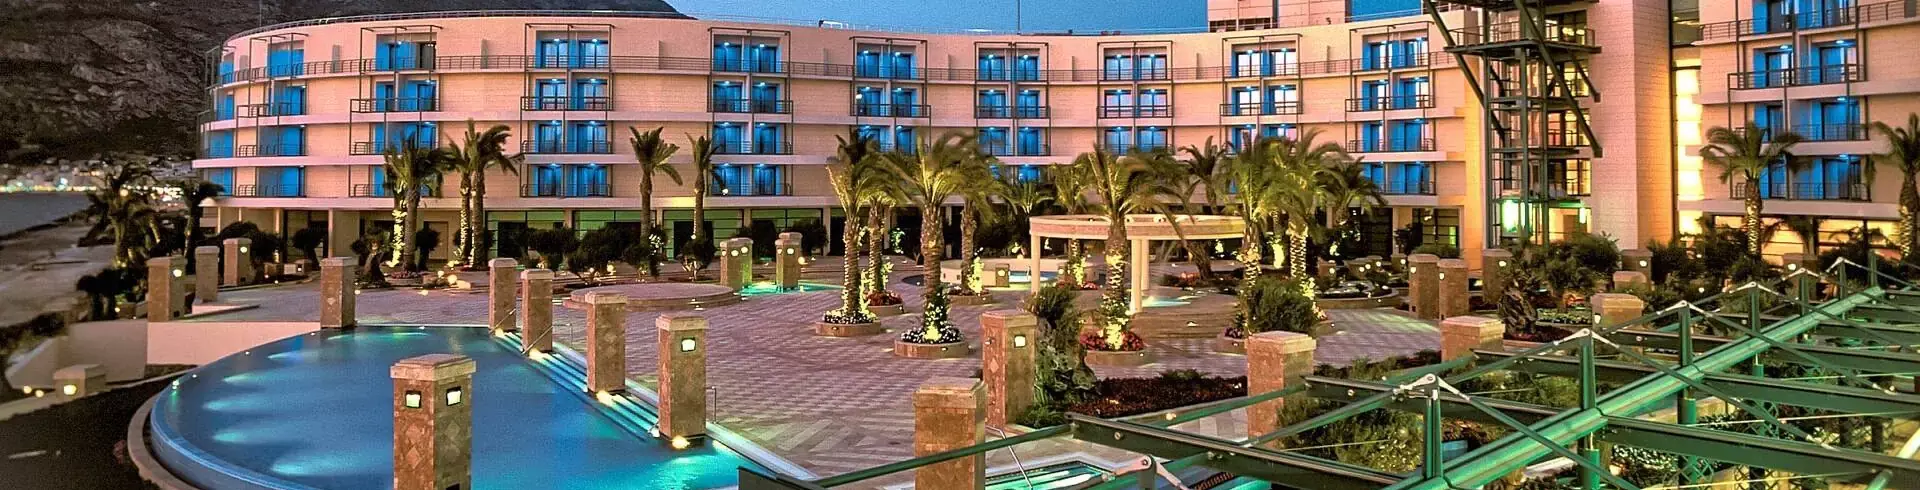 Club Hotel Casino